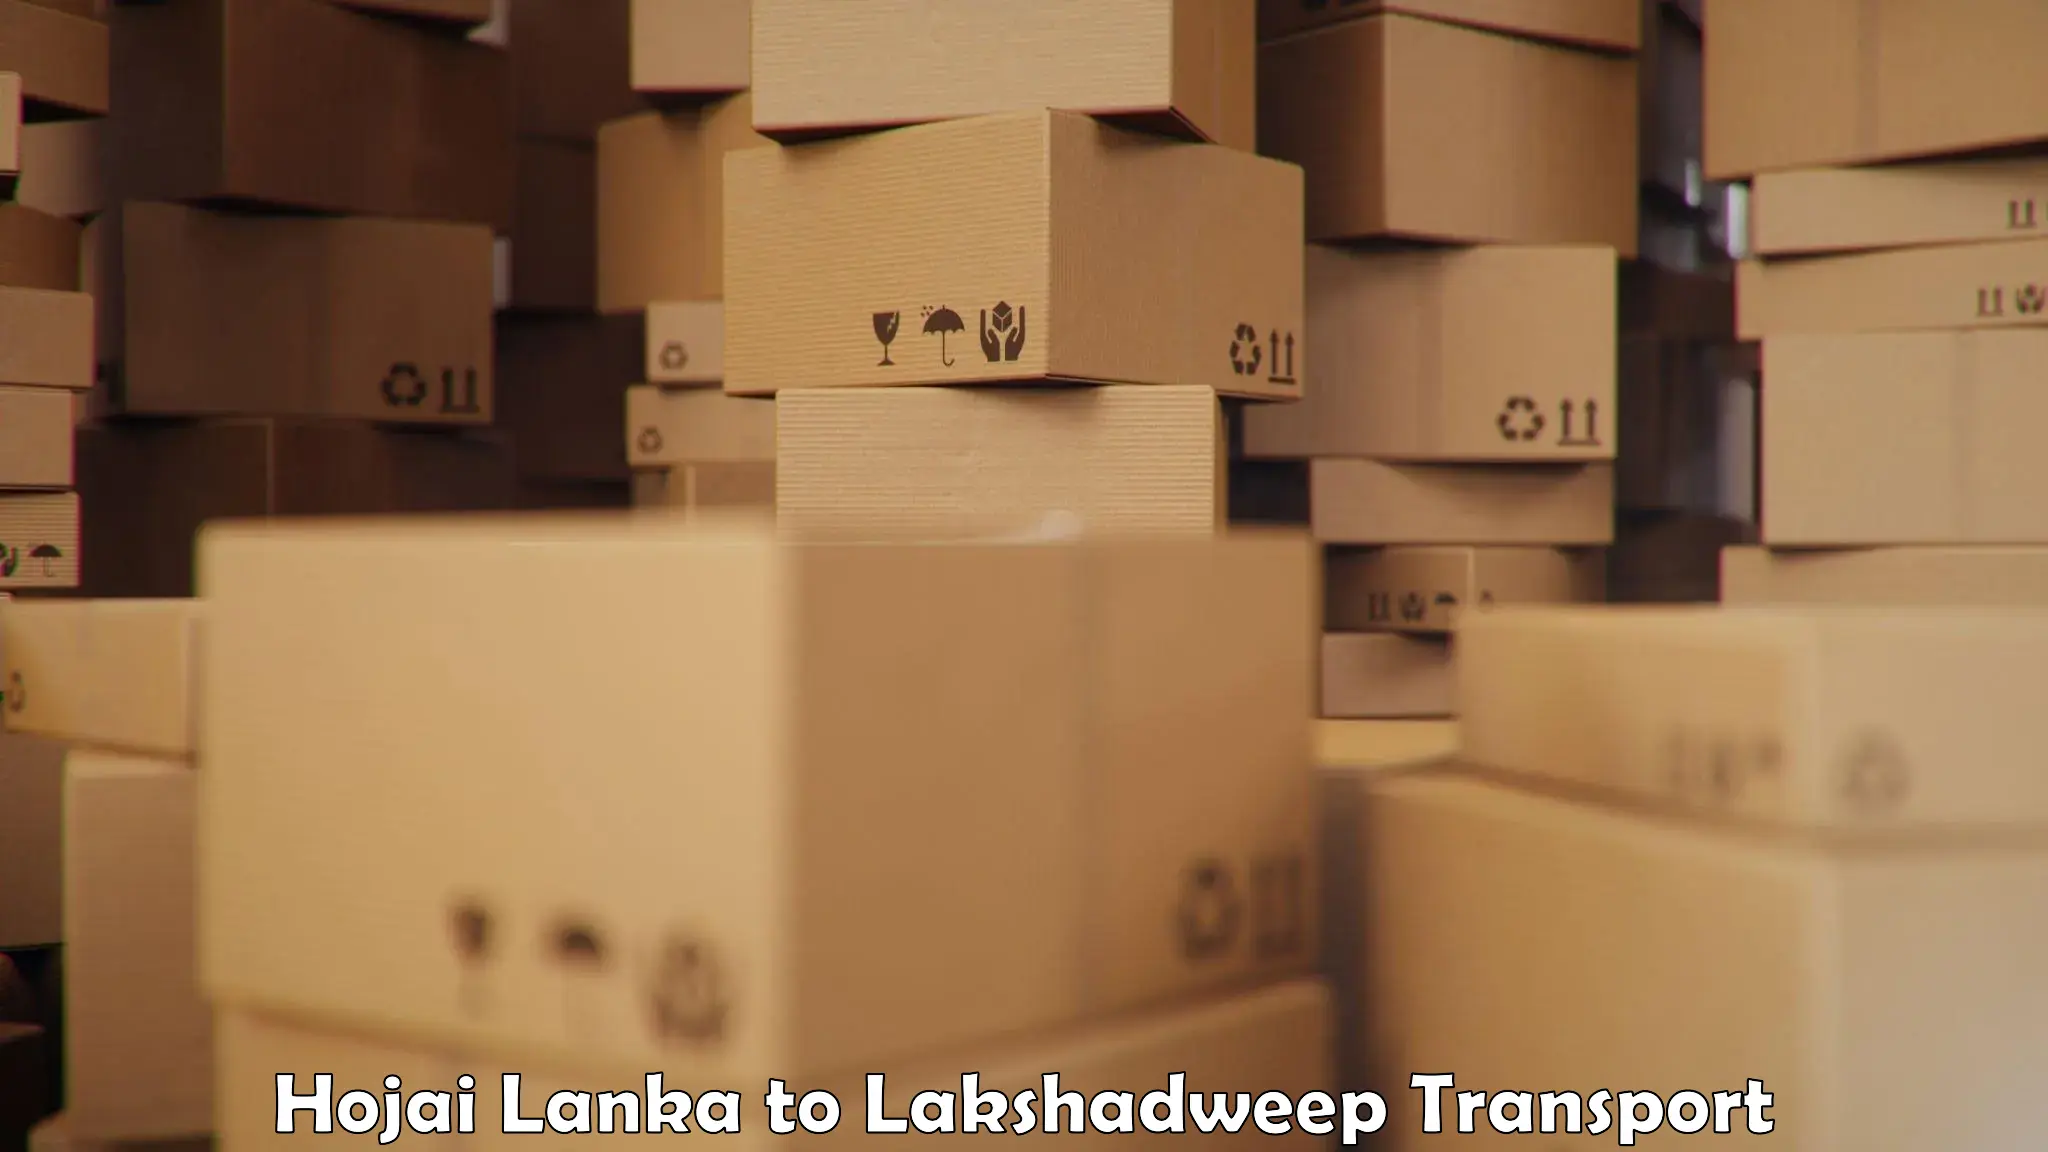 Air freight transport services Hojai Lanka to Lakshadweep